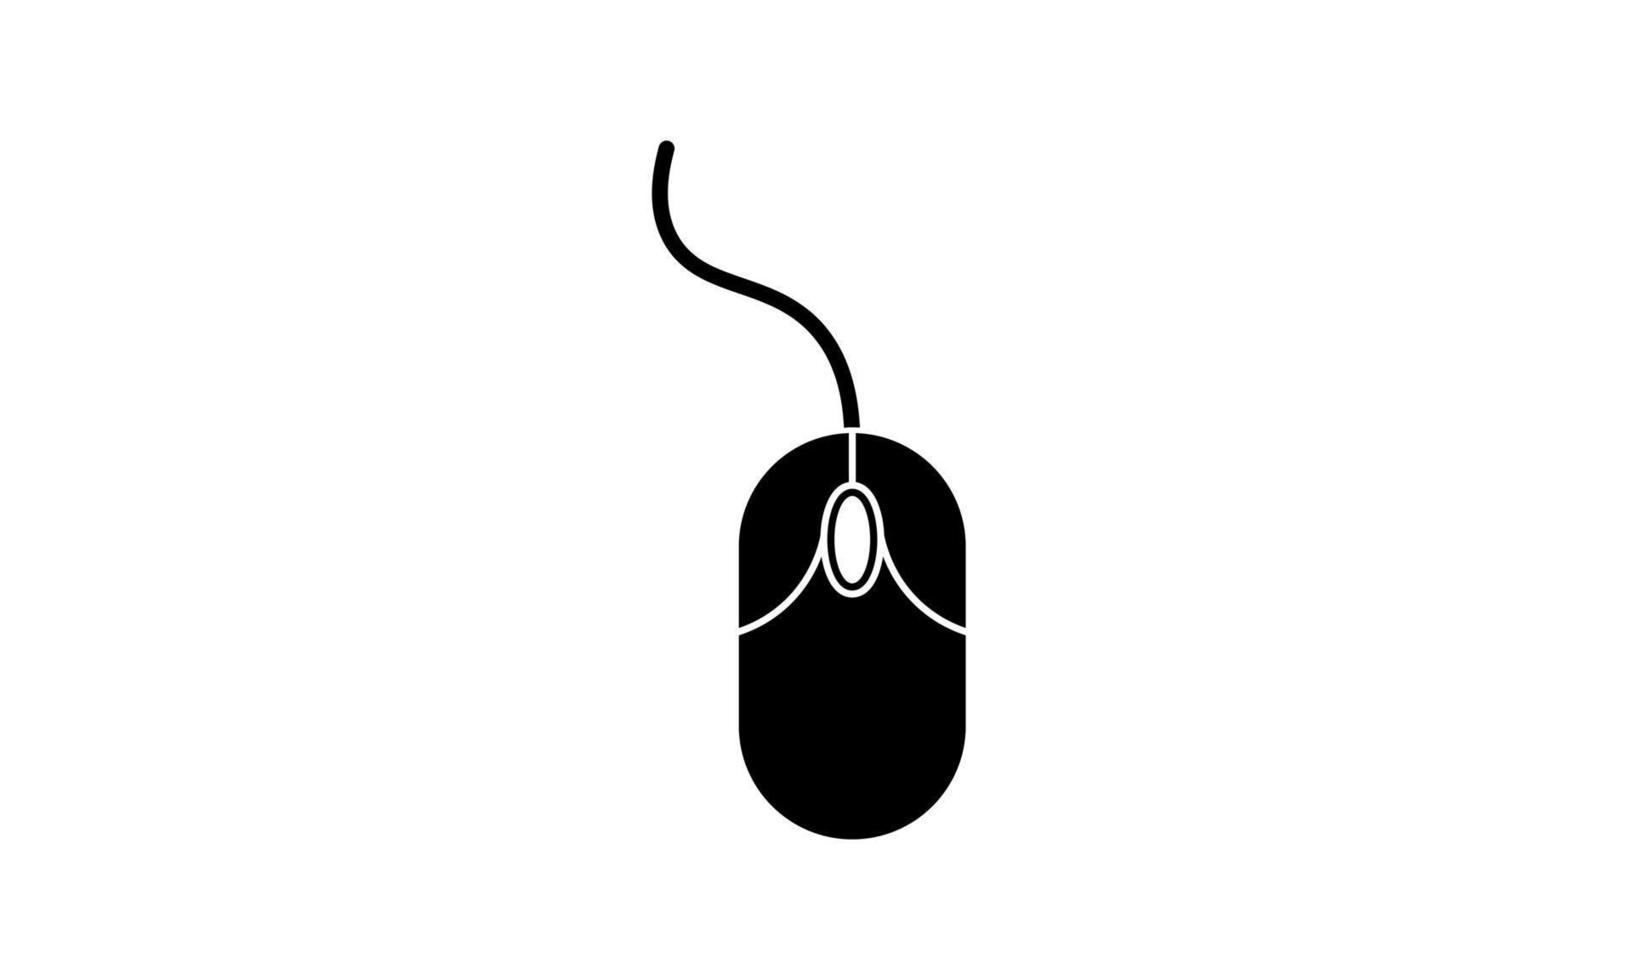 mouse logo design free vector template.